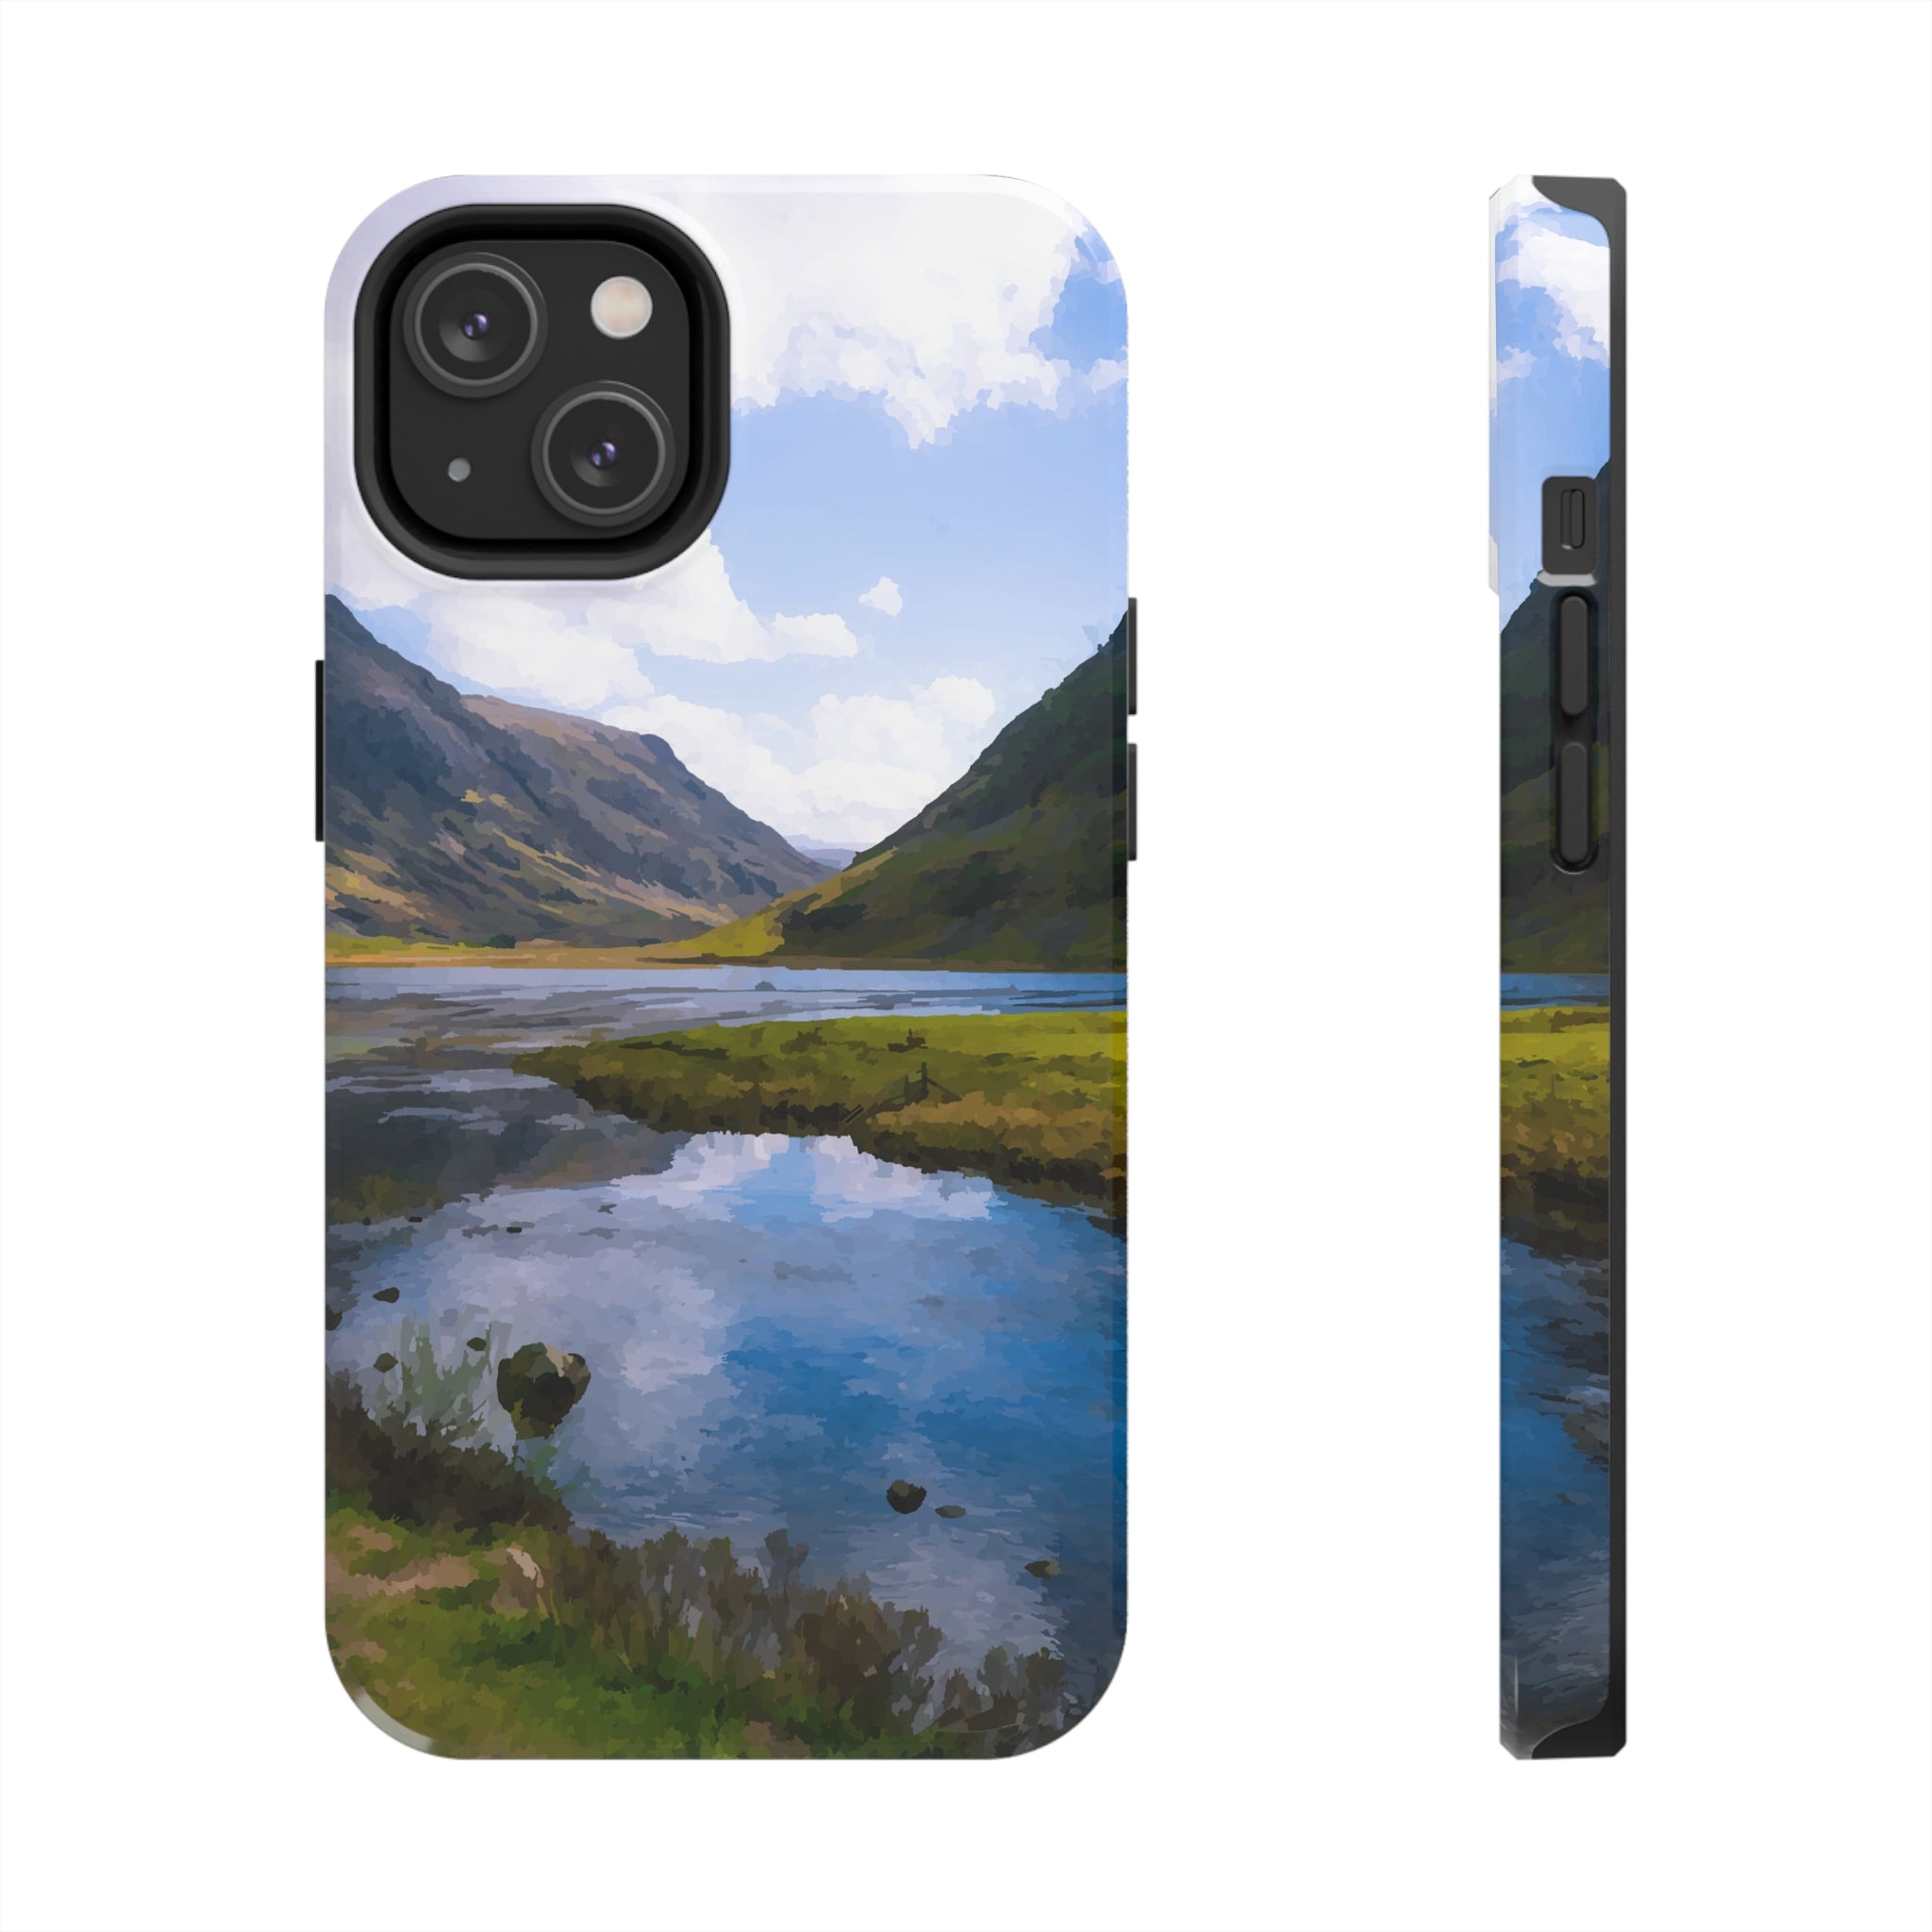 Main image of Mountain Lake View iPhone Case